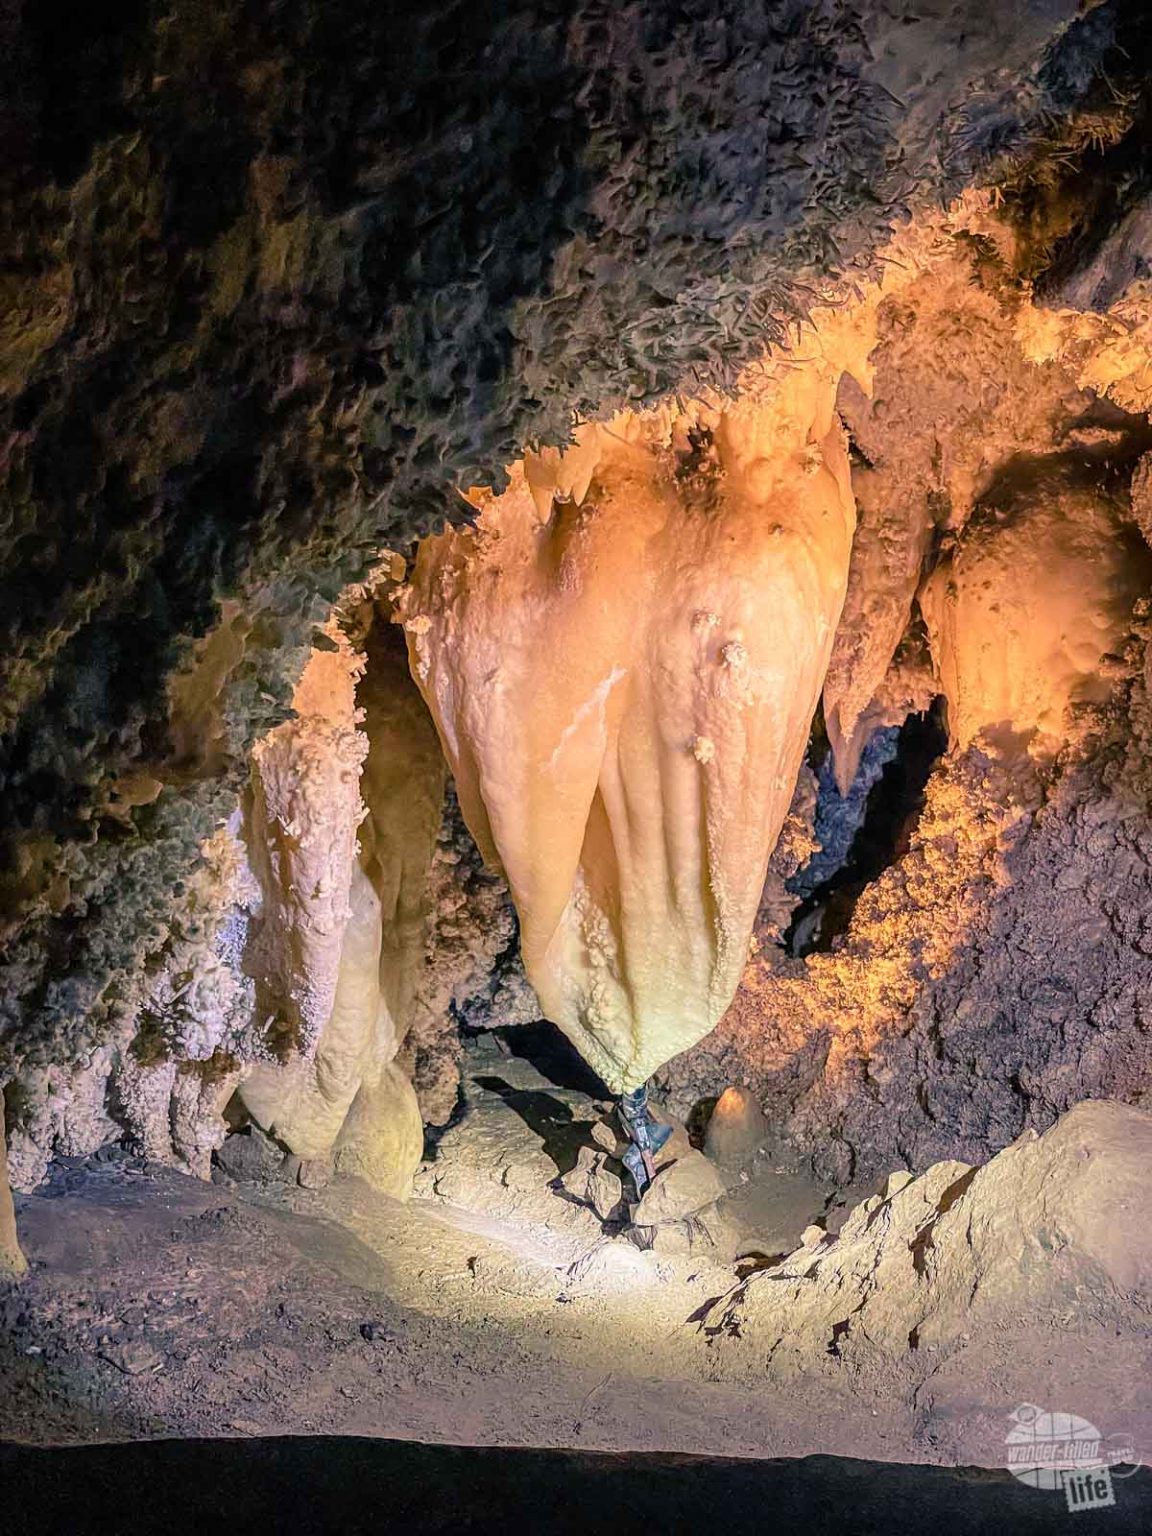 timpanogos cave tour times